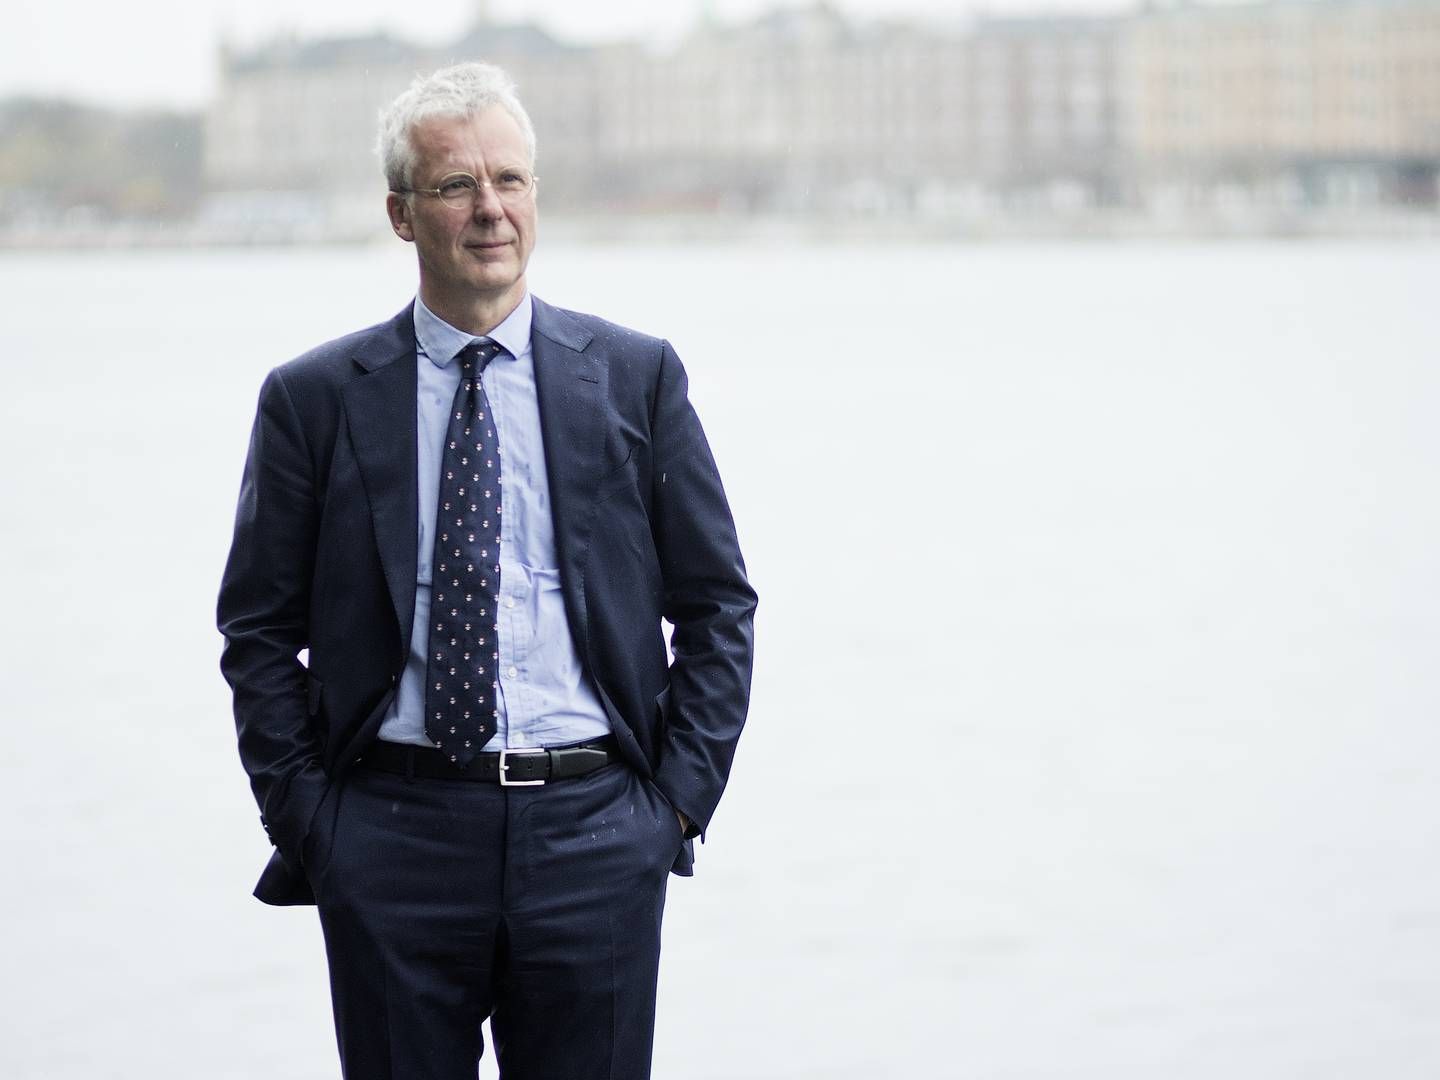 Adm. direktør i Finansiel Stabilitet, Henrik Bjerre-Nielsen. | Foto: Jens Henrik Daugaard/ERH